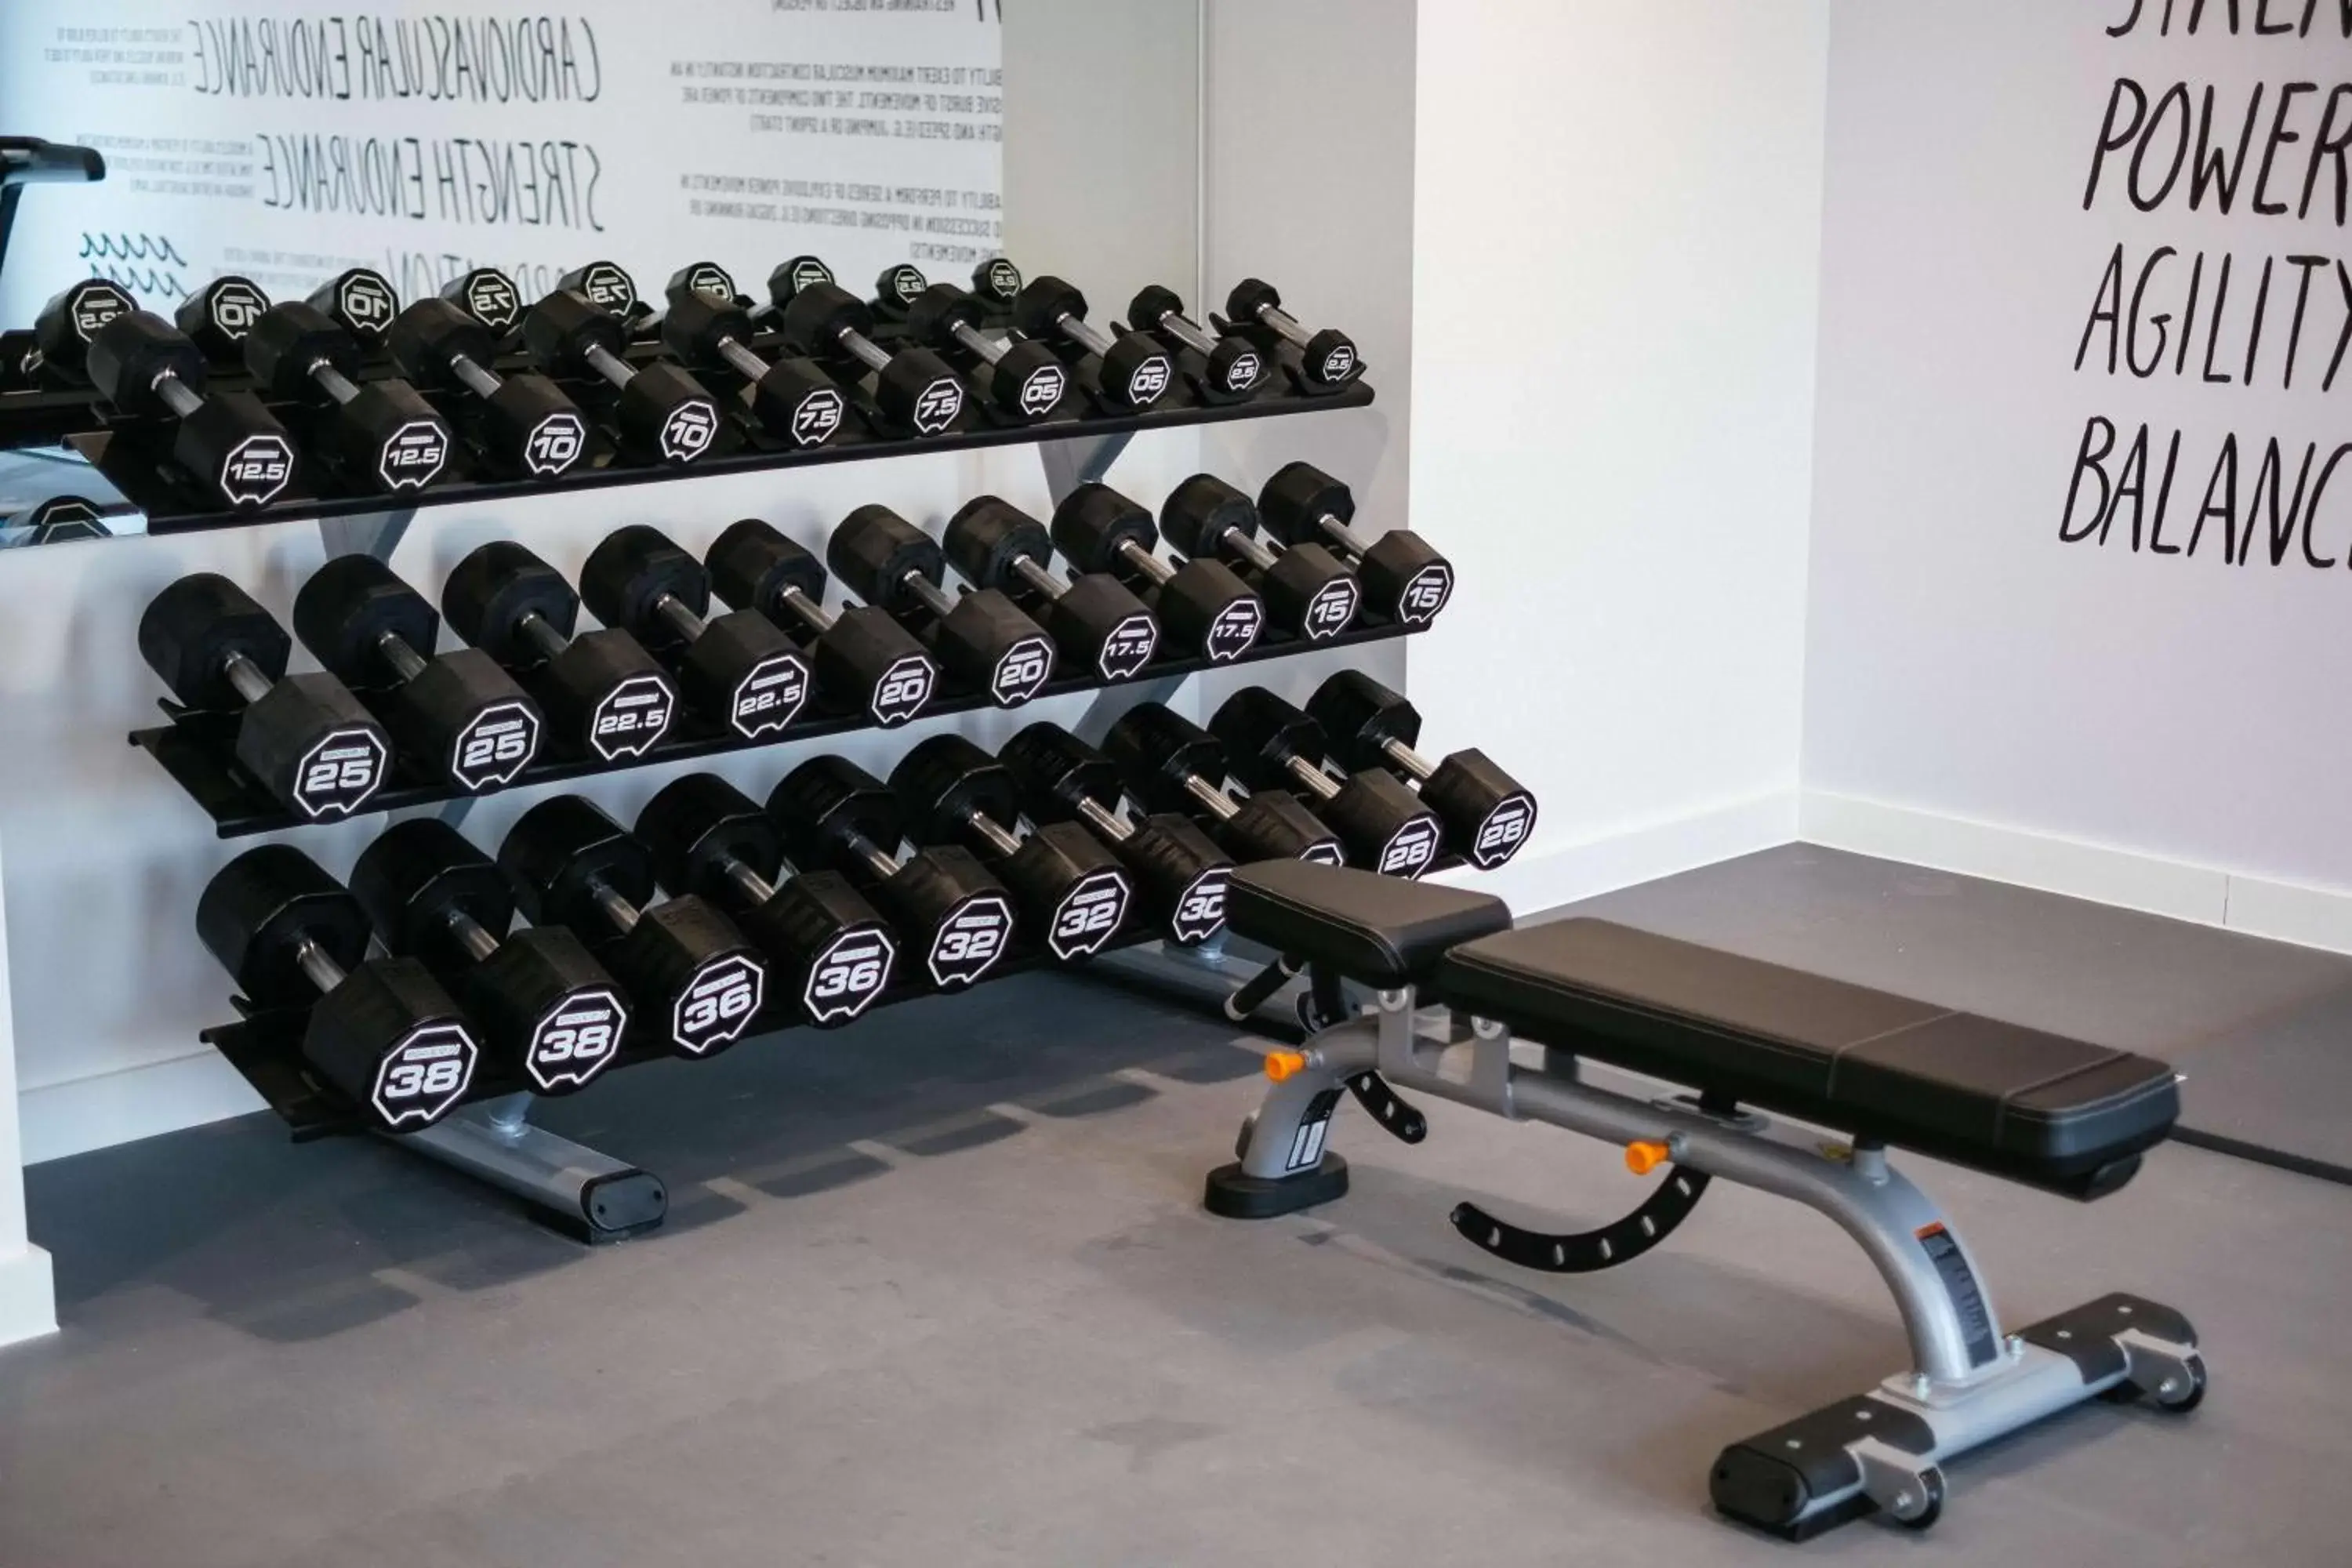 Fitness centre/facilities, Fitness Center/Facilities in Hilton Garden Inn Snowdonia